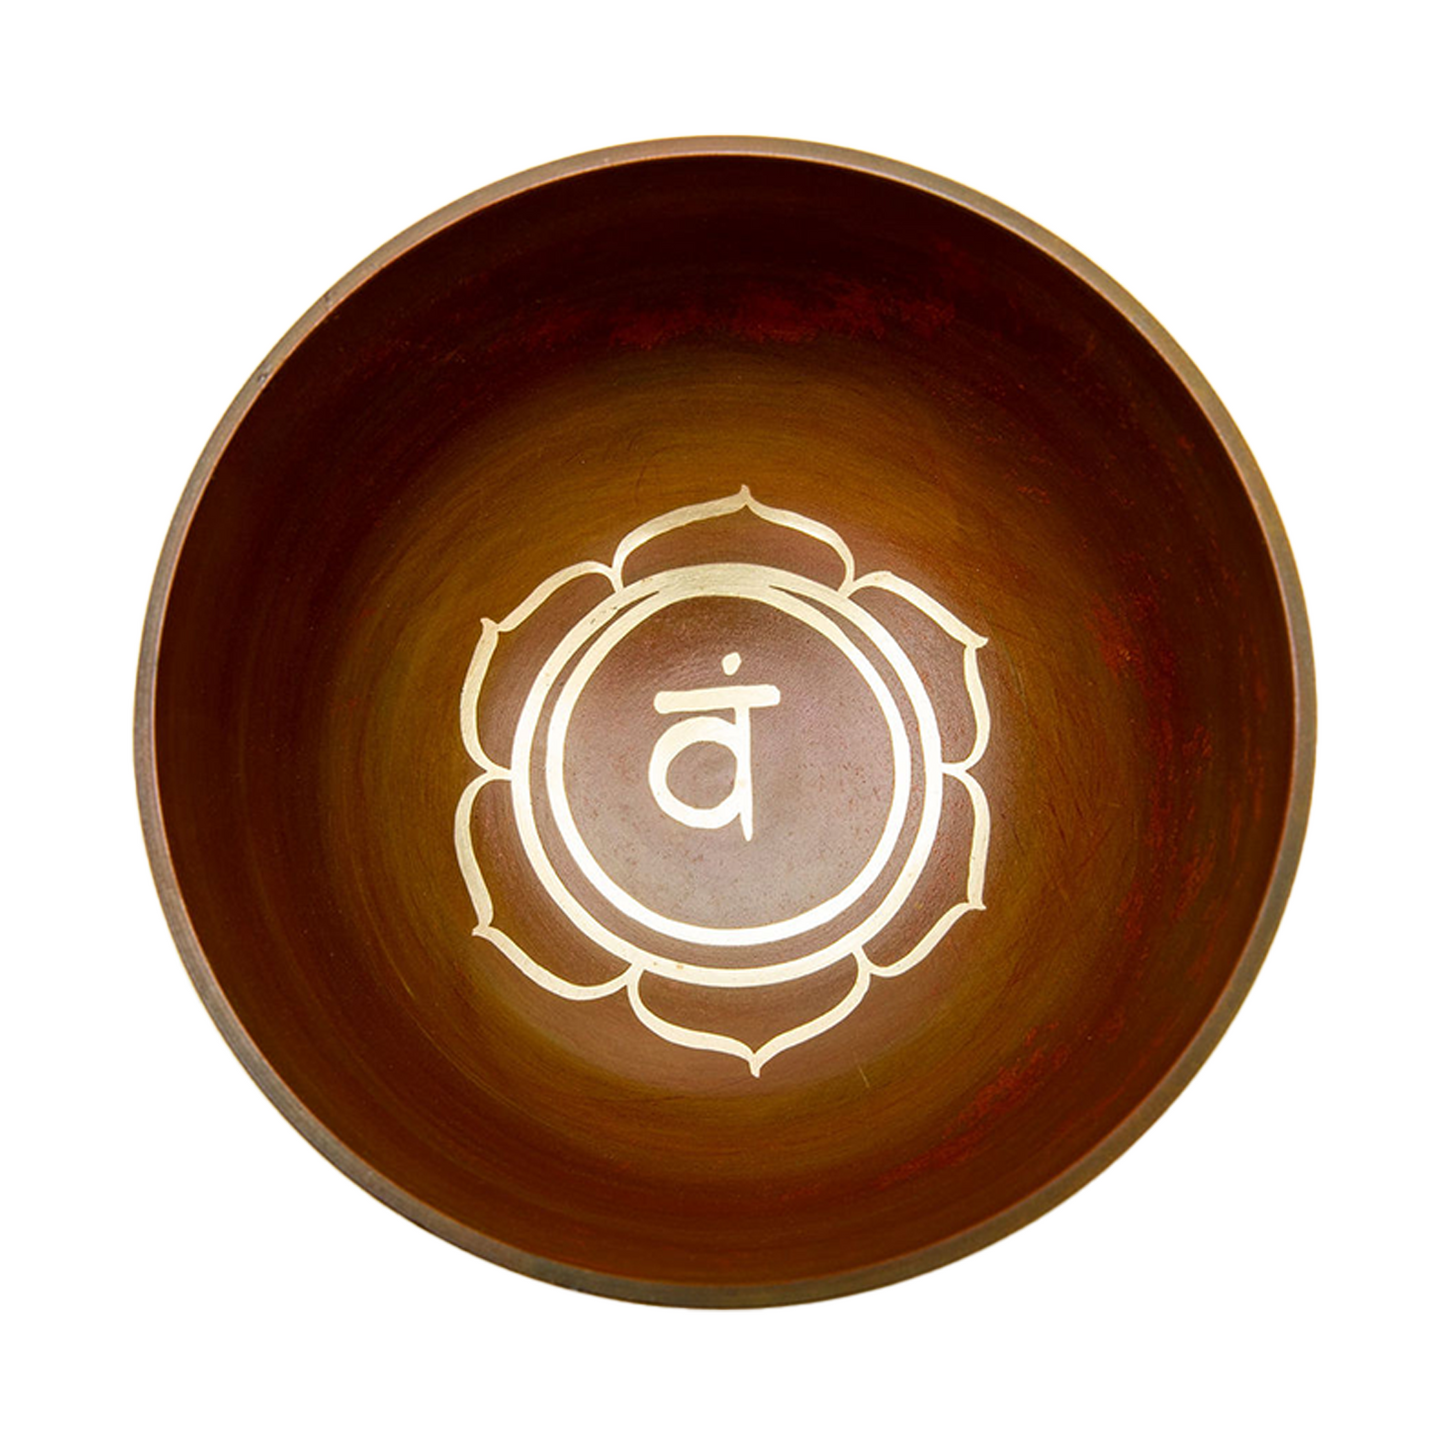 Inside view of the orange chakra (sacral chakra) bowl on a white backdrop.